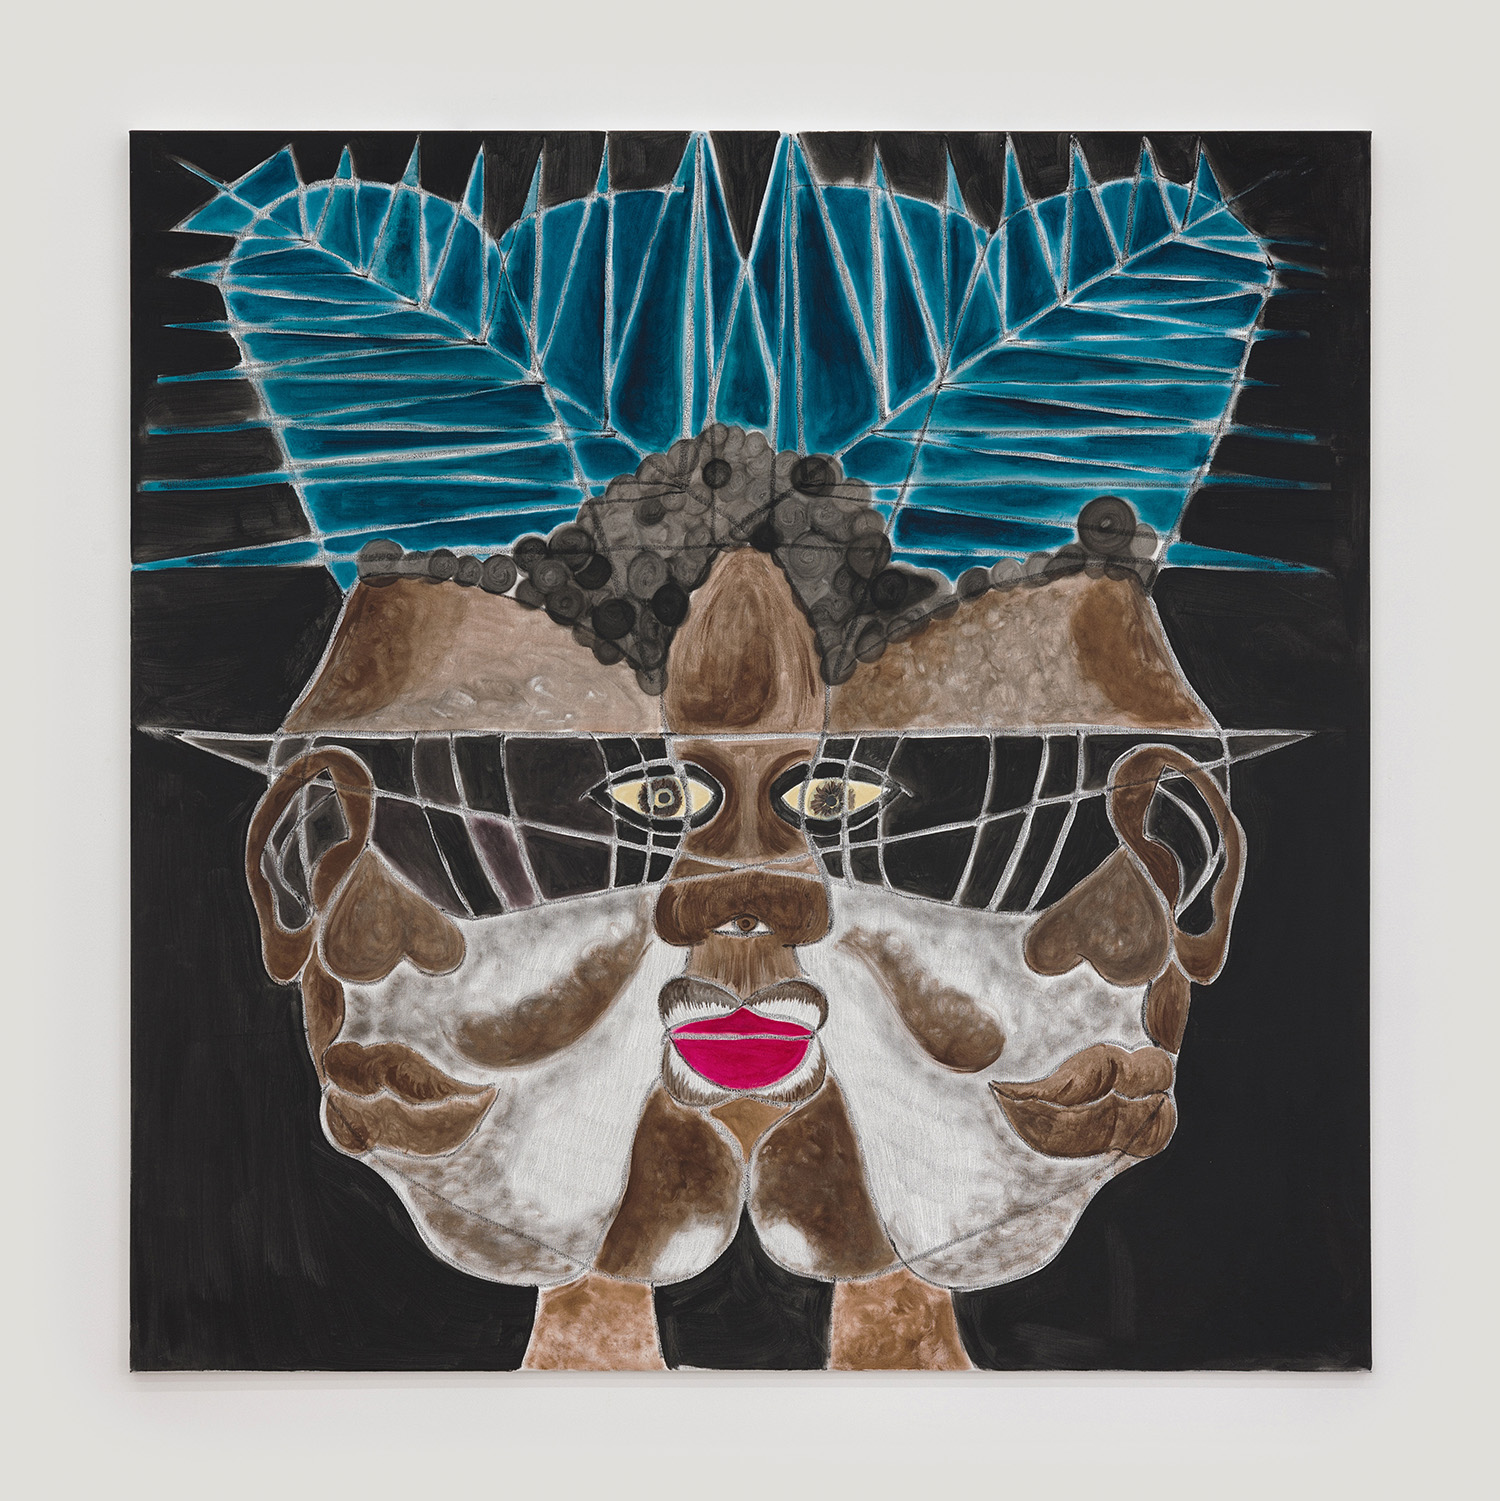 Nicholas Grafia, Three Faces A Day, 2021, acrylic and graphite on canvas, 160 x 160 cm, 63 x 63 in